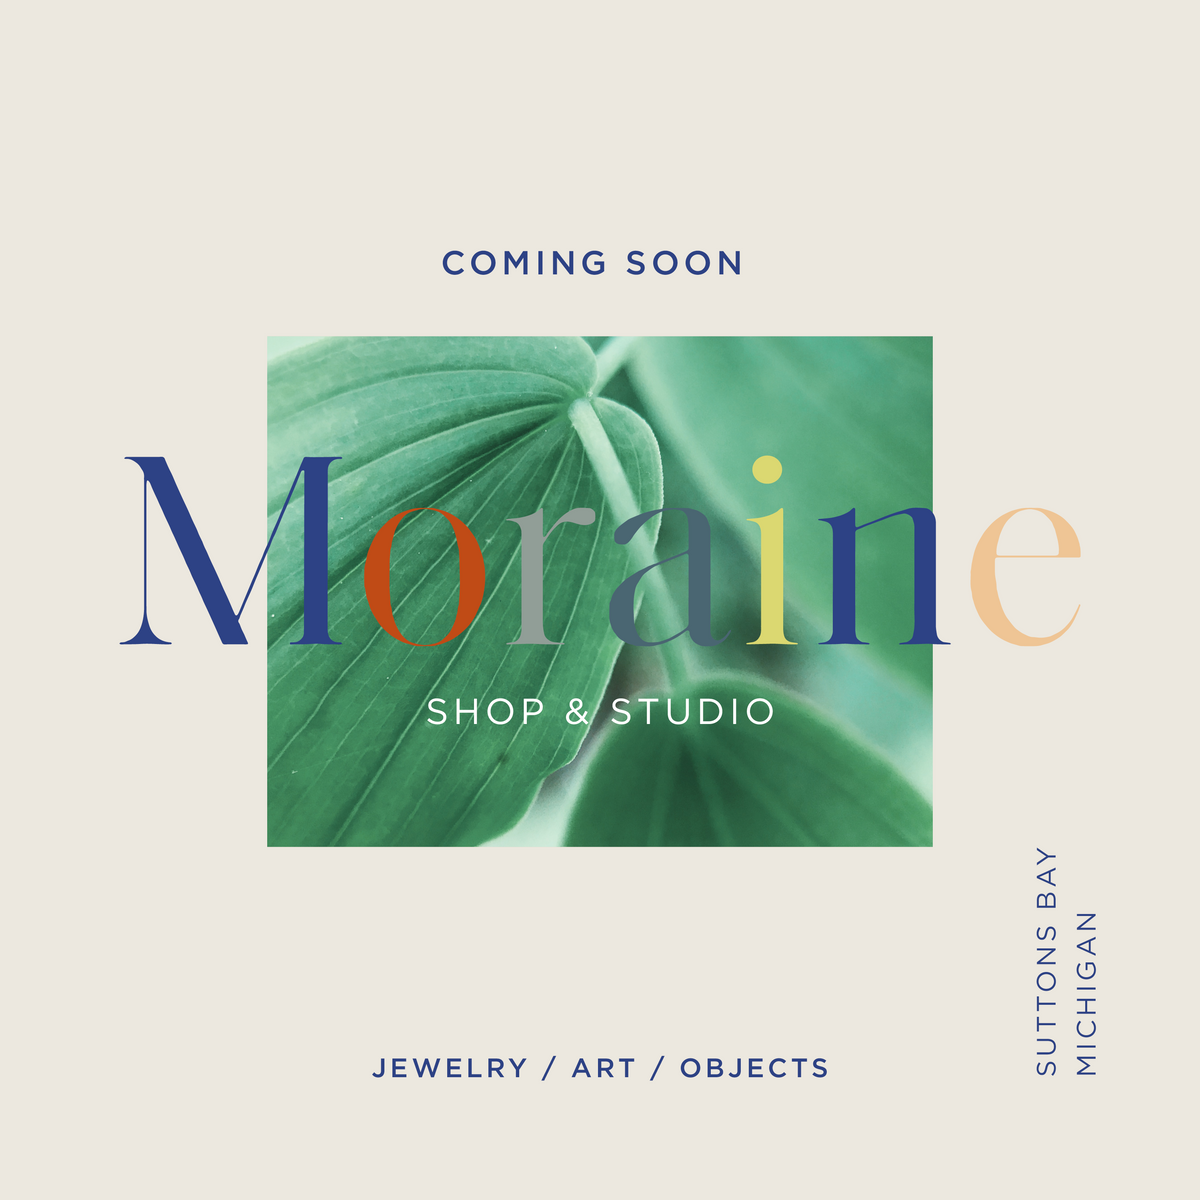 Introducing: Moraine Shop and Studio